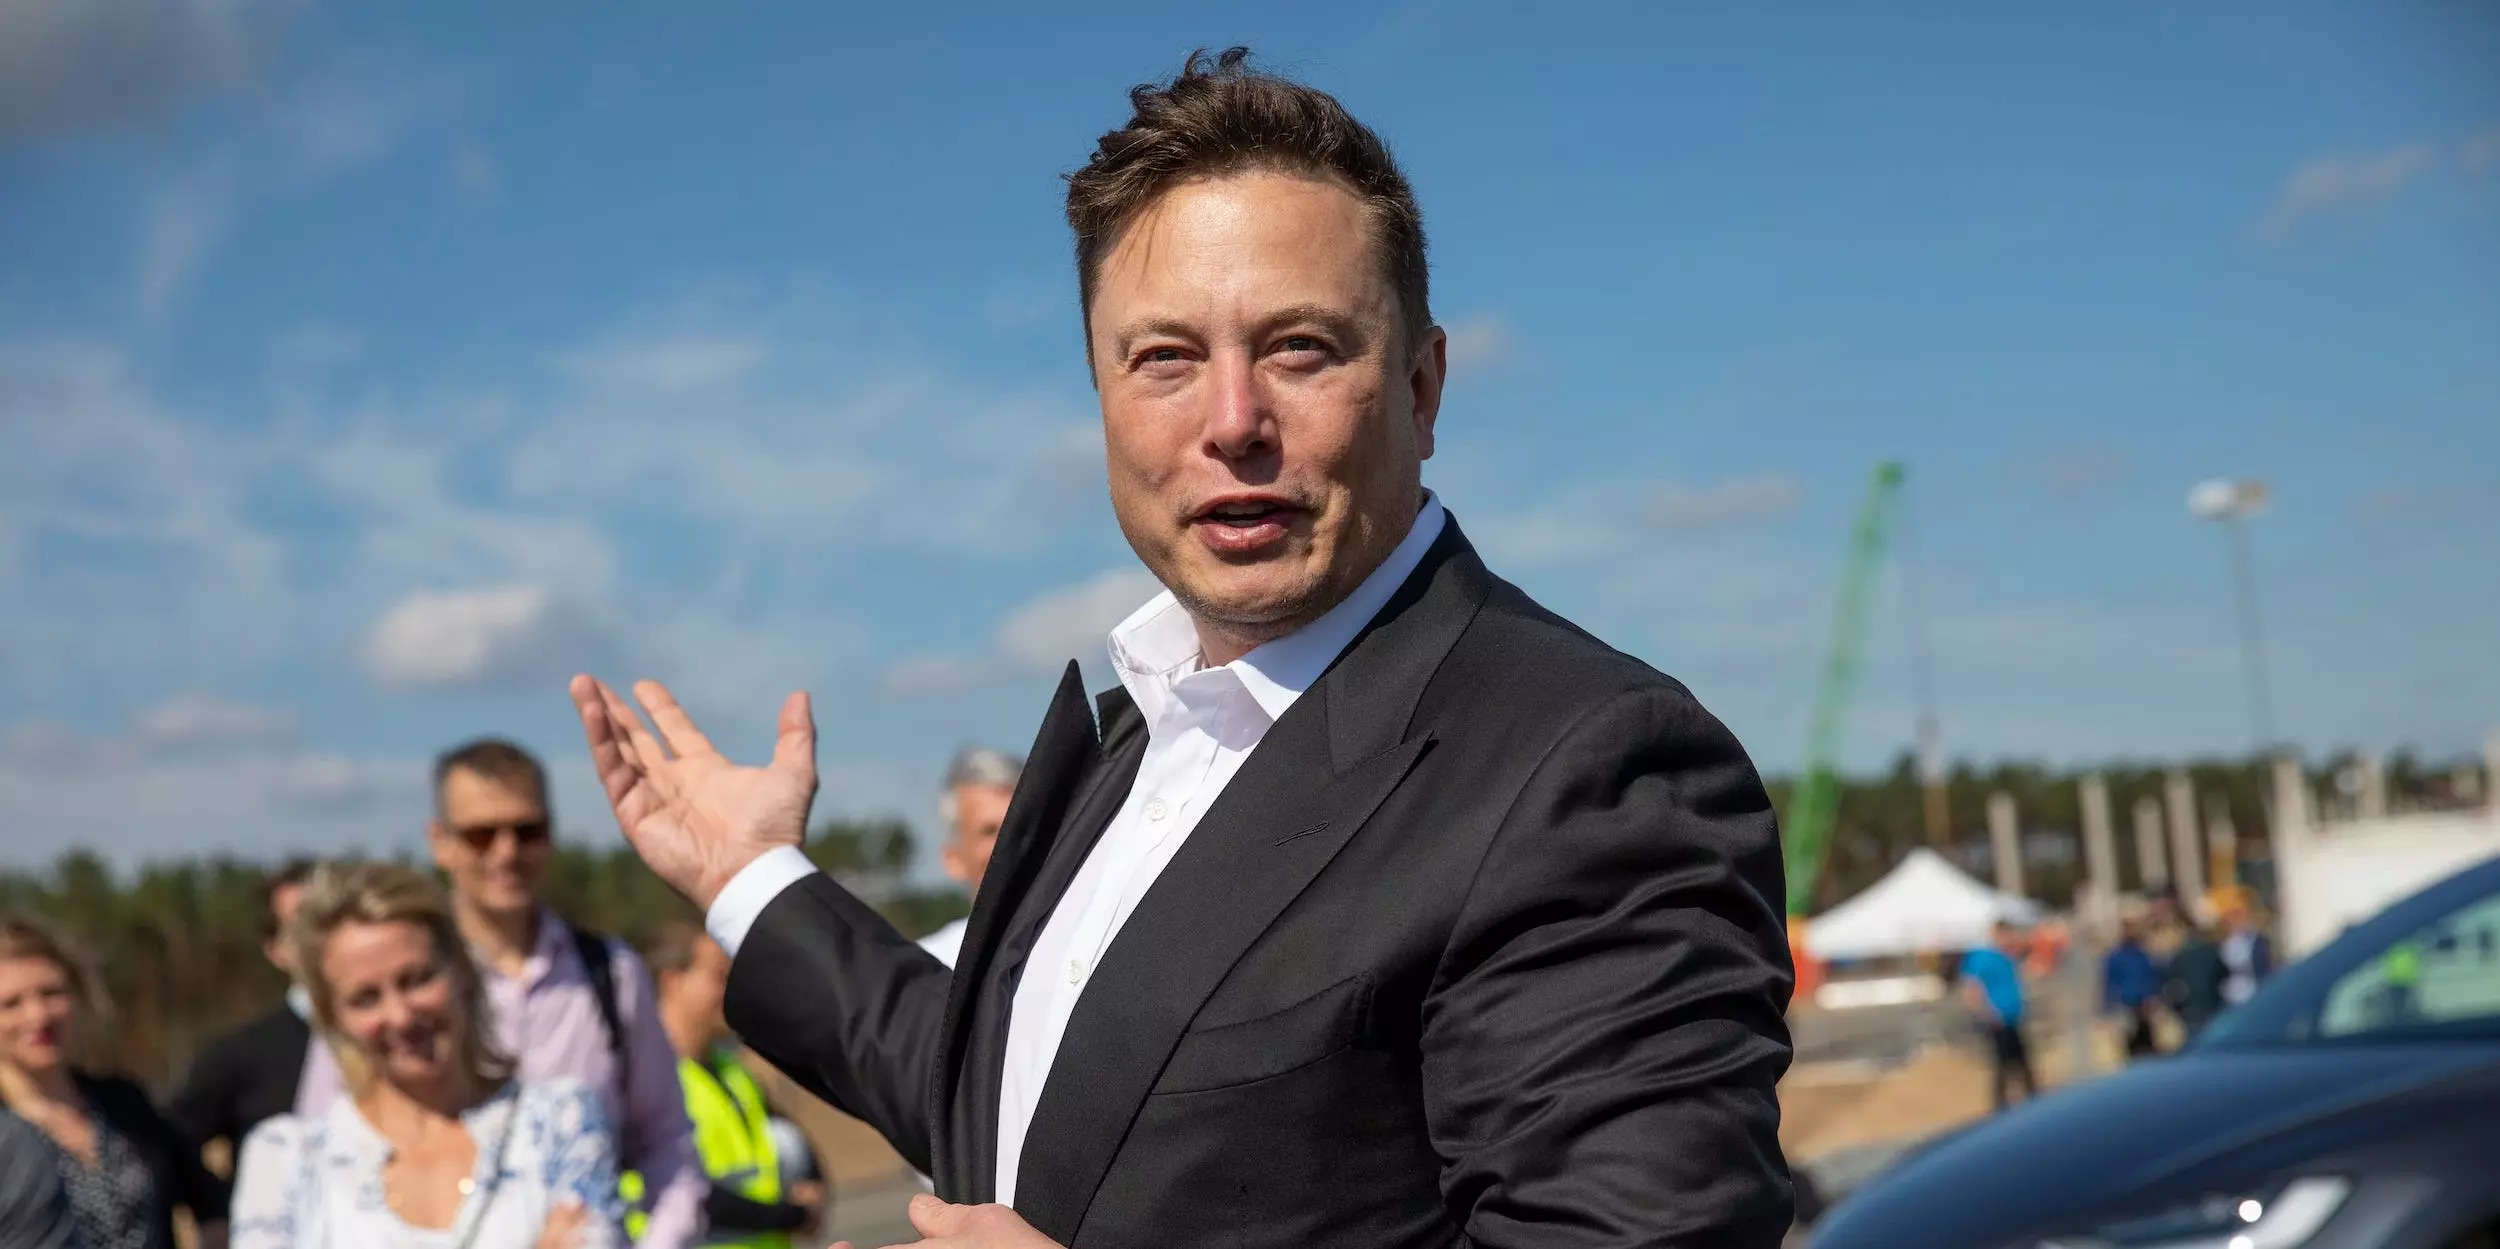 Elon Musk sells $5 billion in Tesla shares after Twitter poll